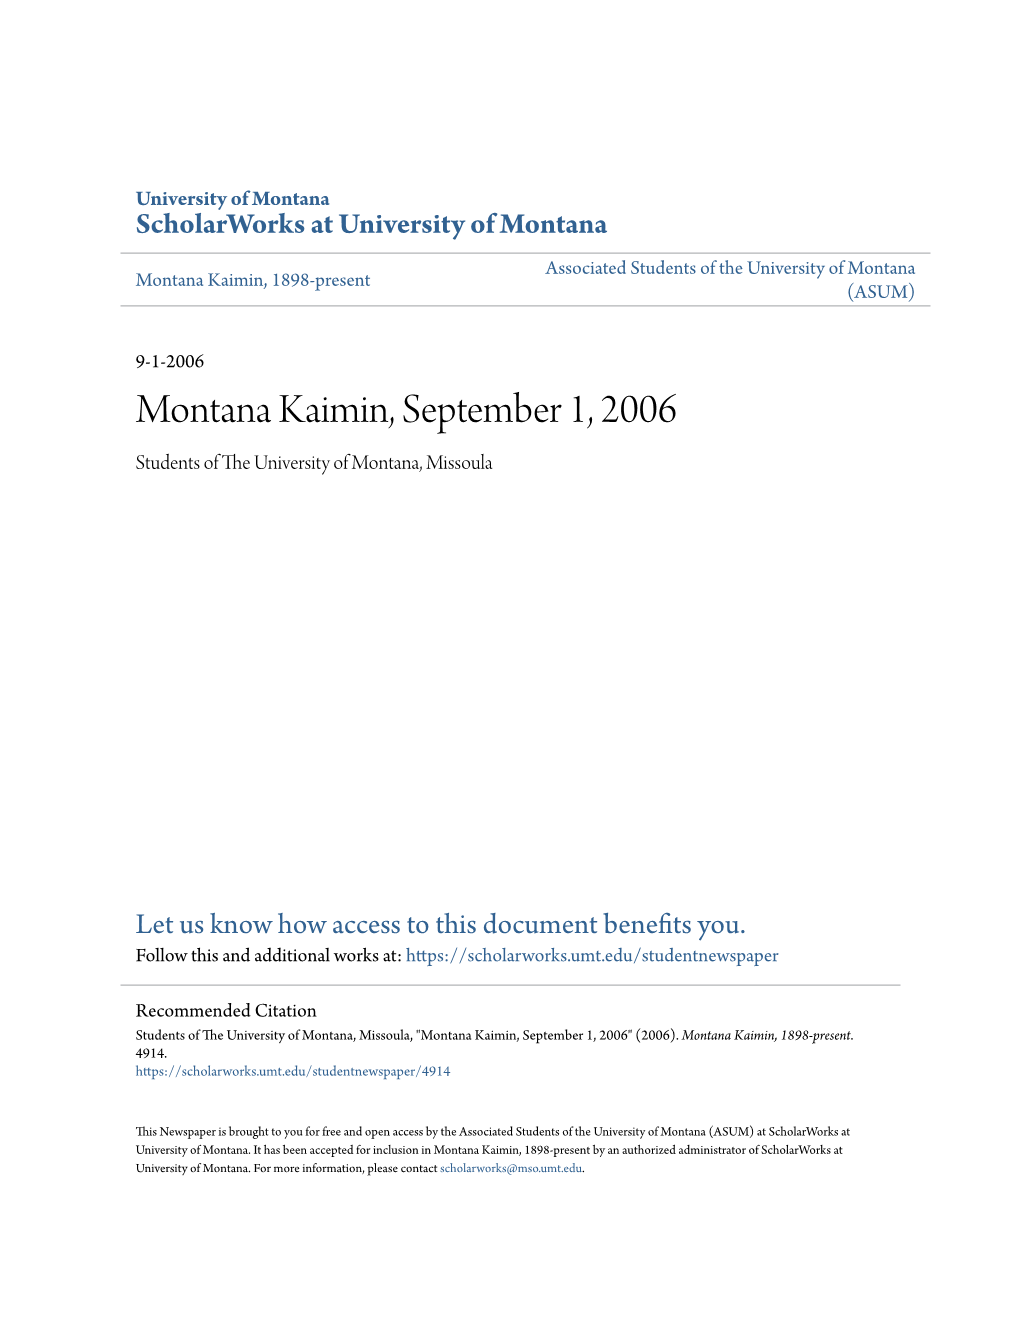 Montana Kaimin, September 1, 2006 Students of the Niu Versity of Montana, Missoula